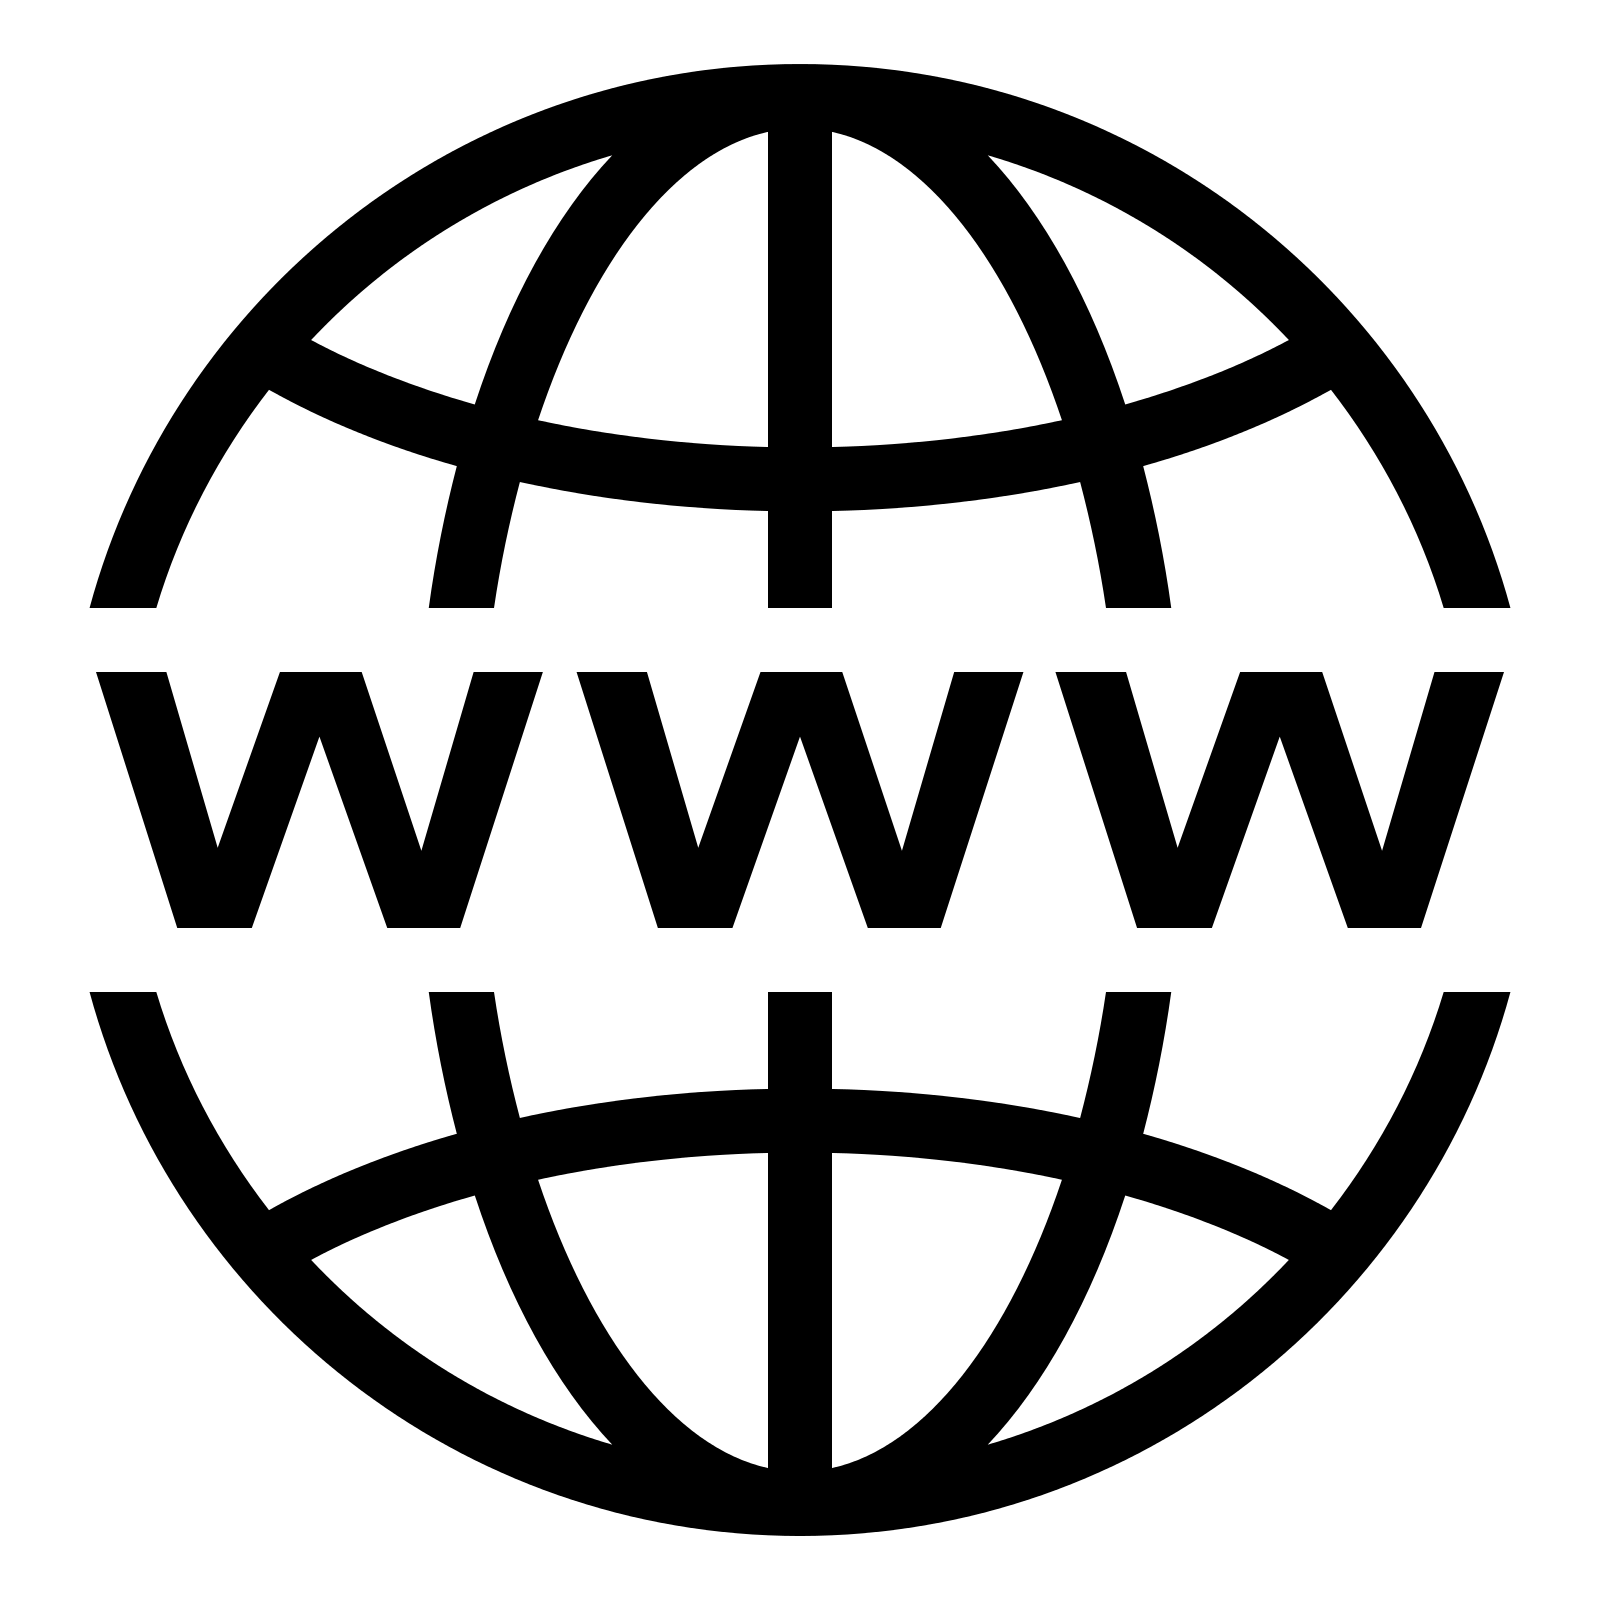 World wide web logo